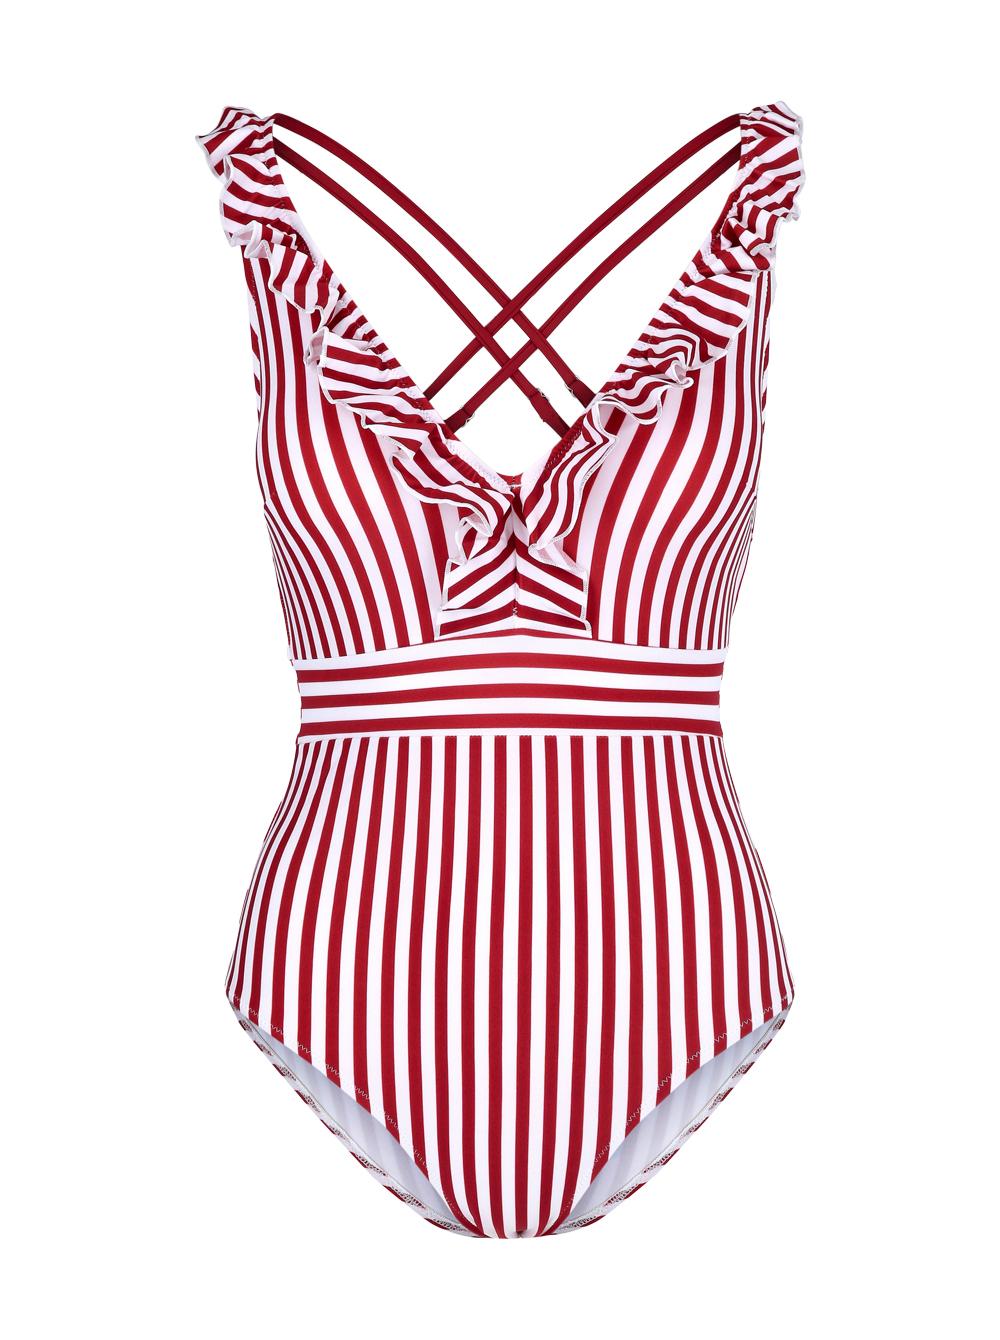 Selected image for CUPSHE Ženski jednodelni kupaći kostim J35 roze-beli